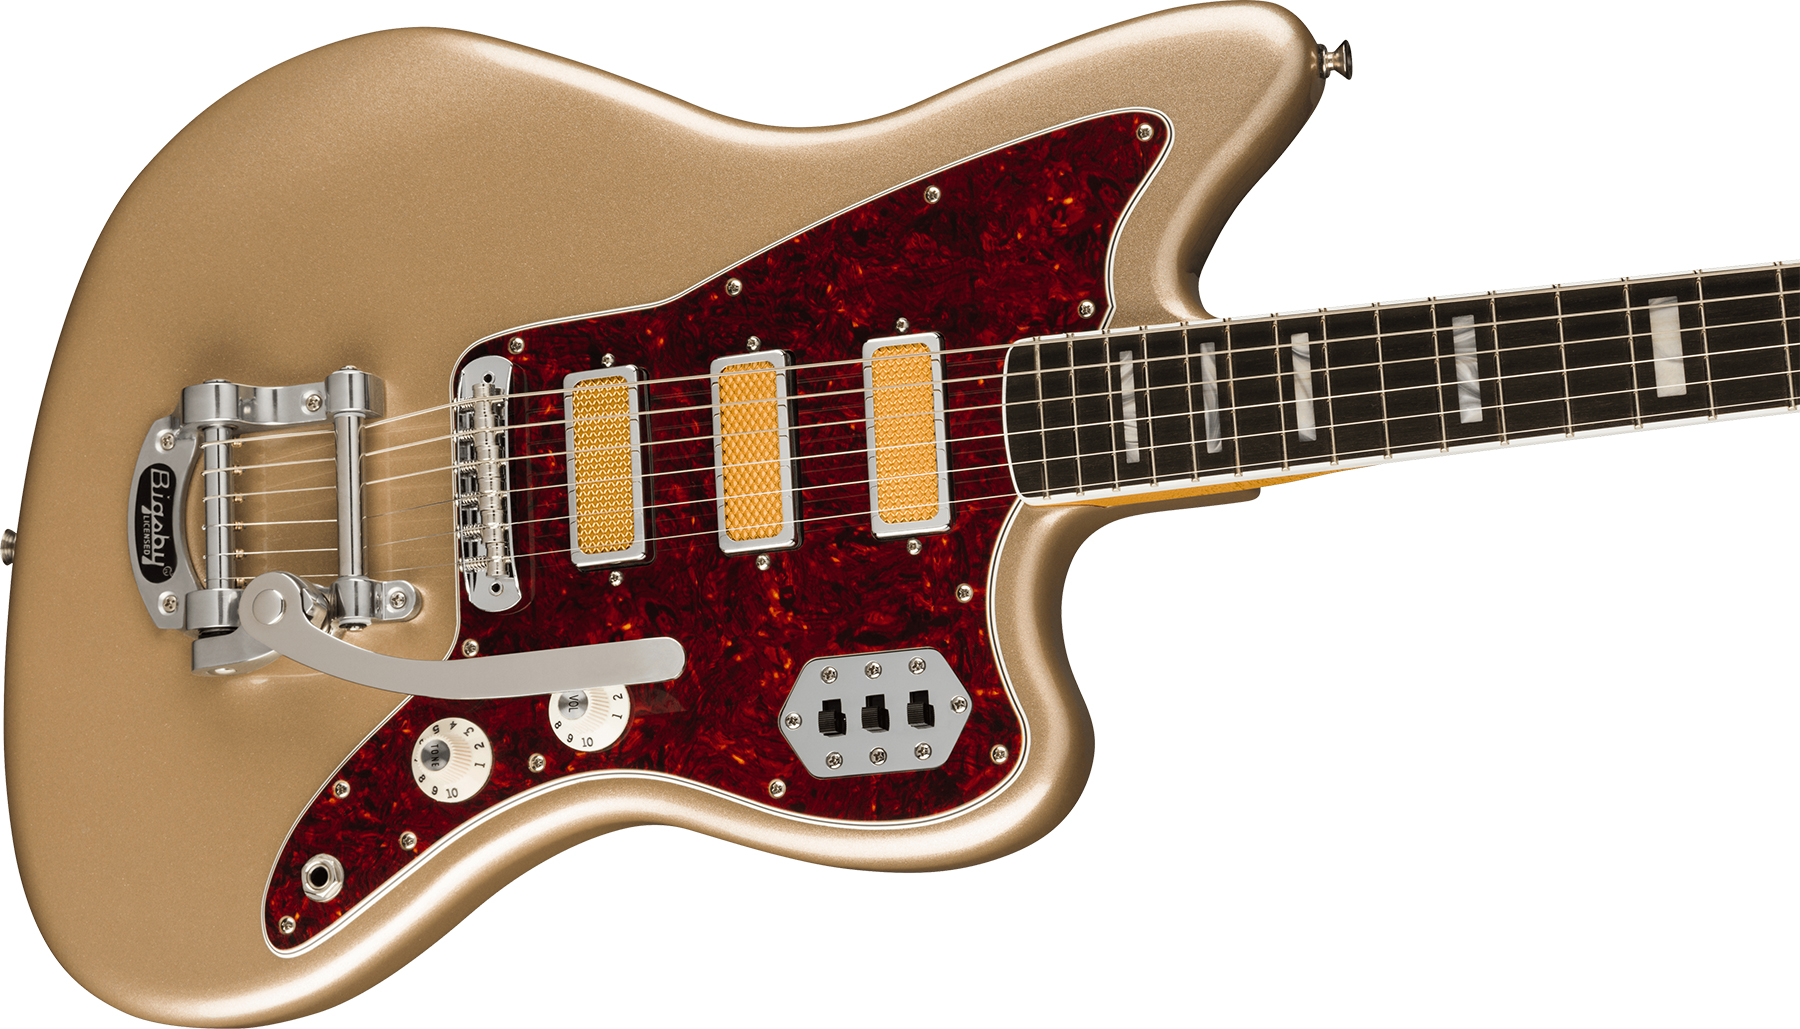 Fender Jazzmaster Gold Foil Ltd Mex 3mh Trem Bigsby Eb - Shoreline Gold - Retro rock electric guitar - Variation 2